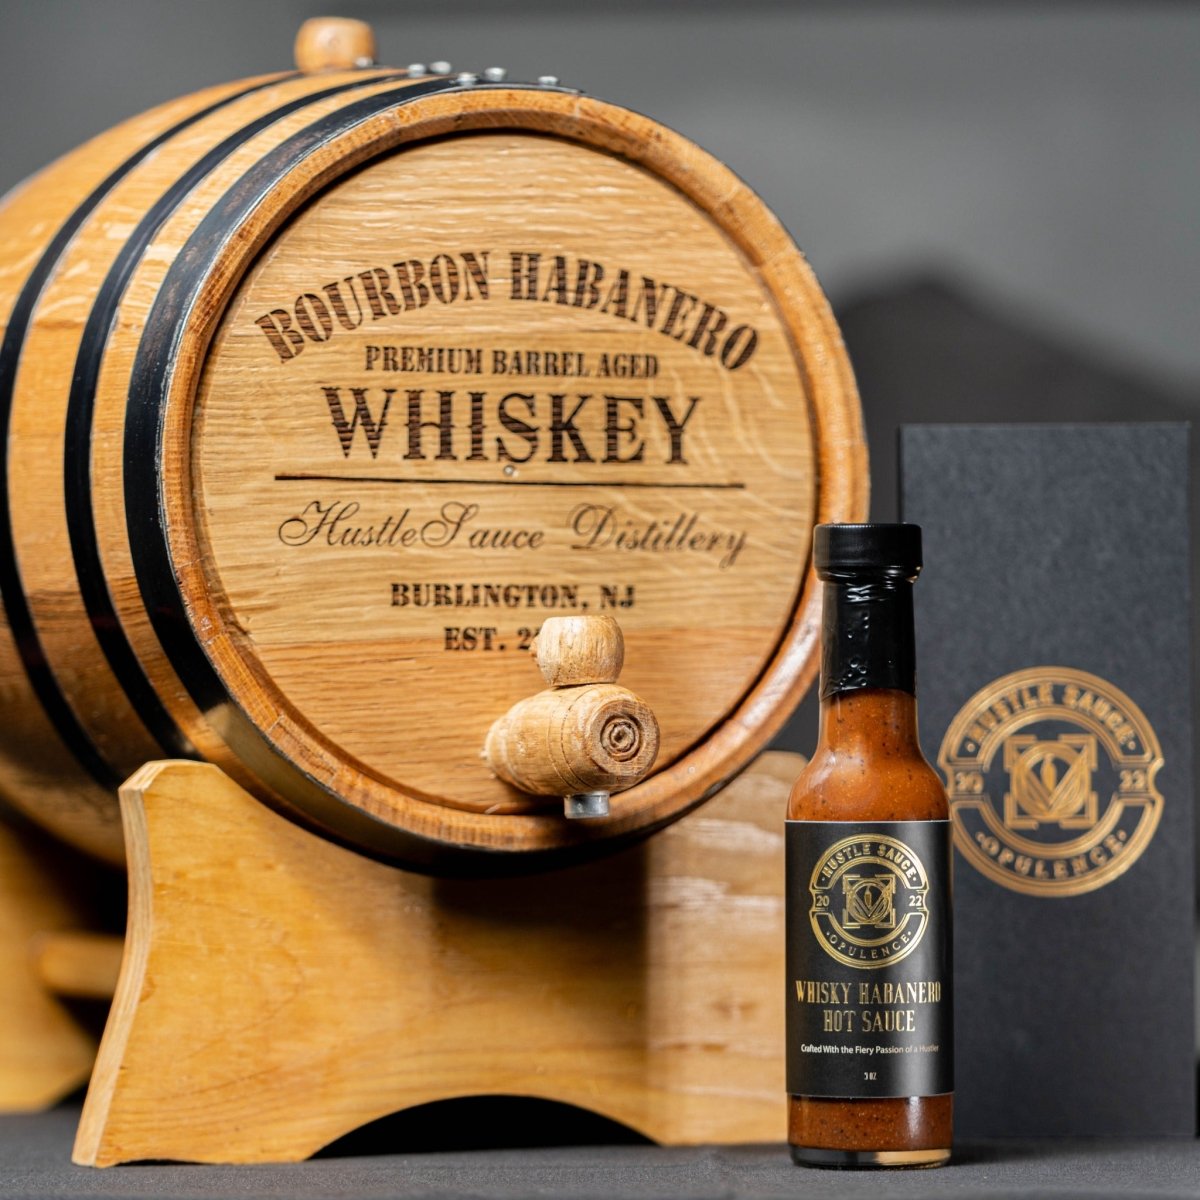 Barrel Aged Whisky Habanero Sauce - HustleSauces